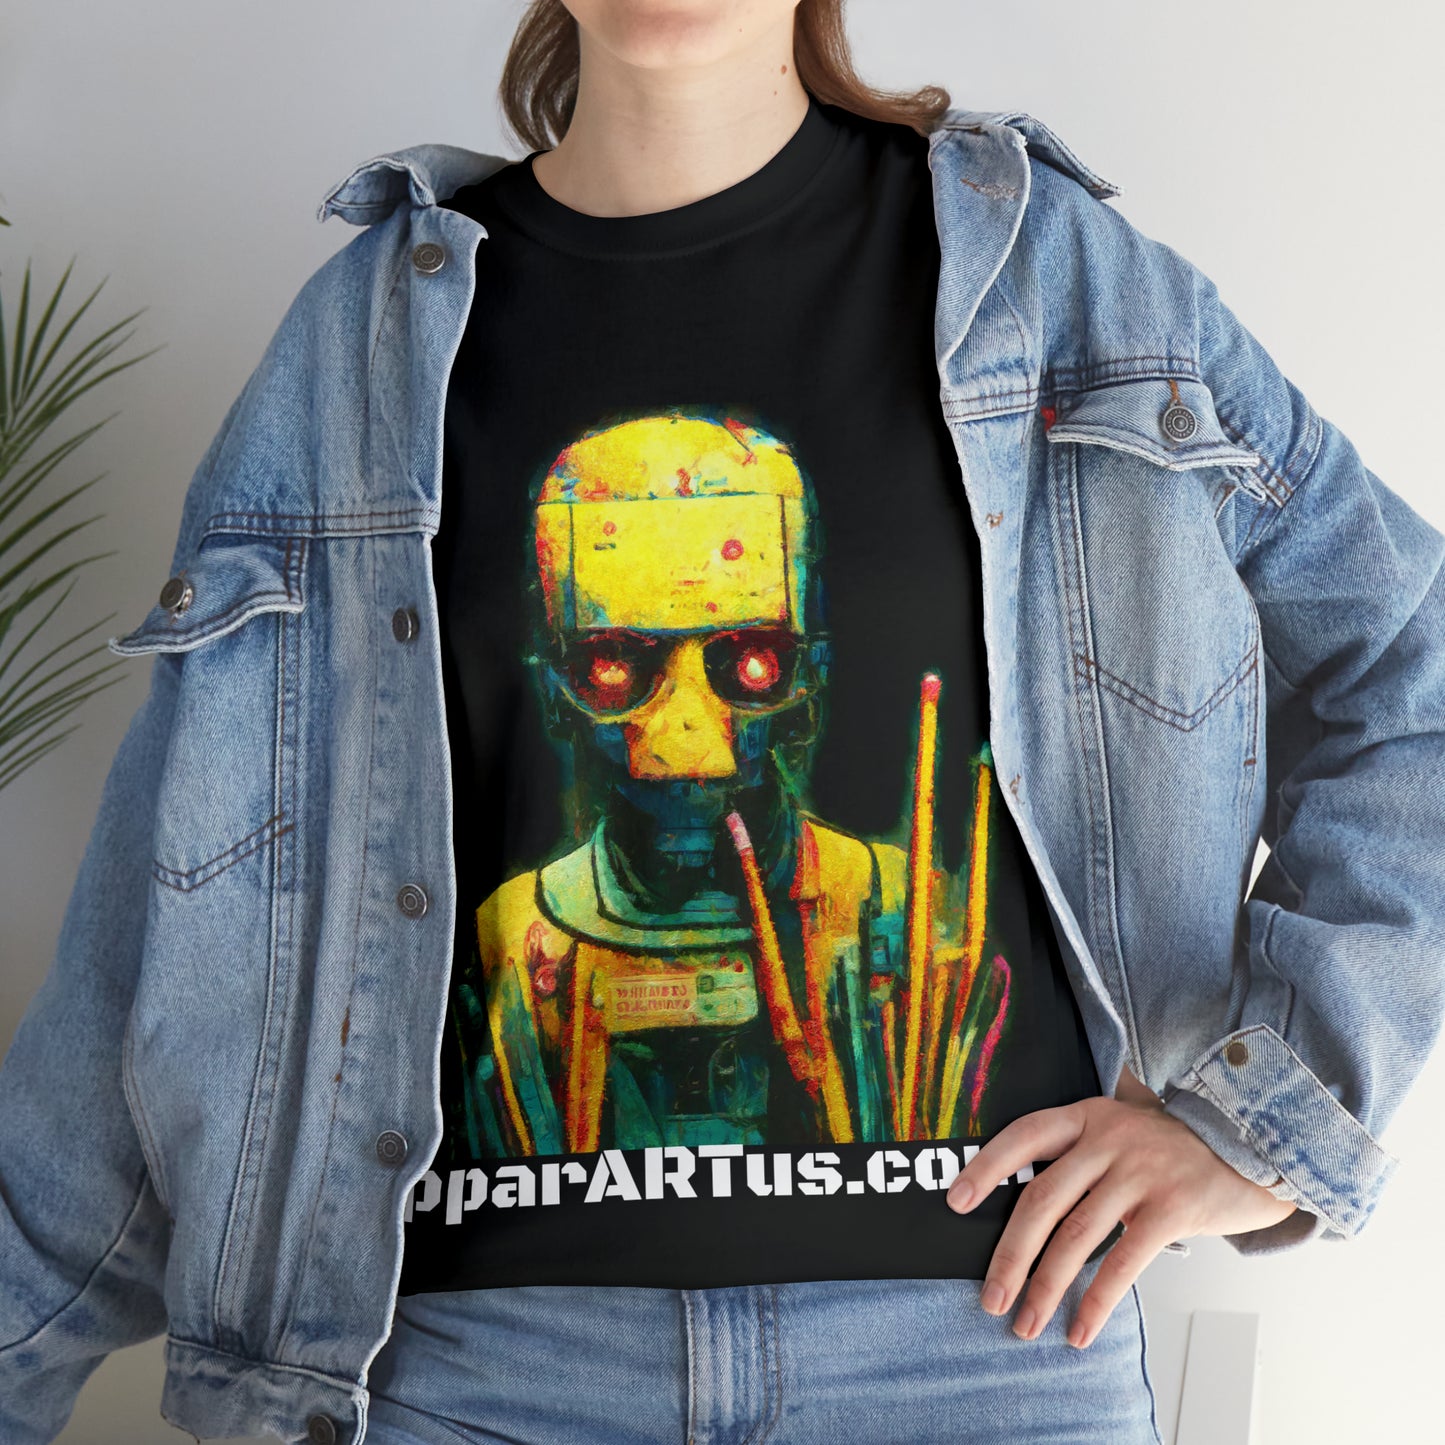 apparARTus.com Unisex Bot1 T-Shirt - shipped from Australia